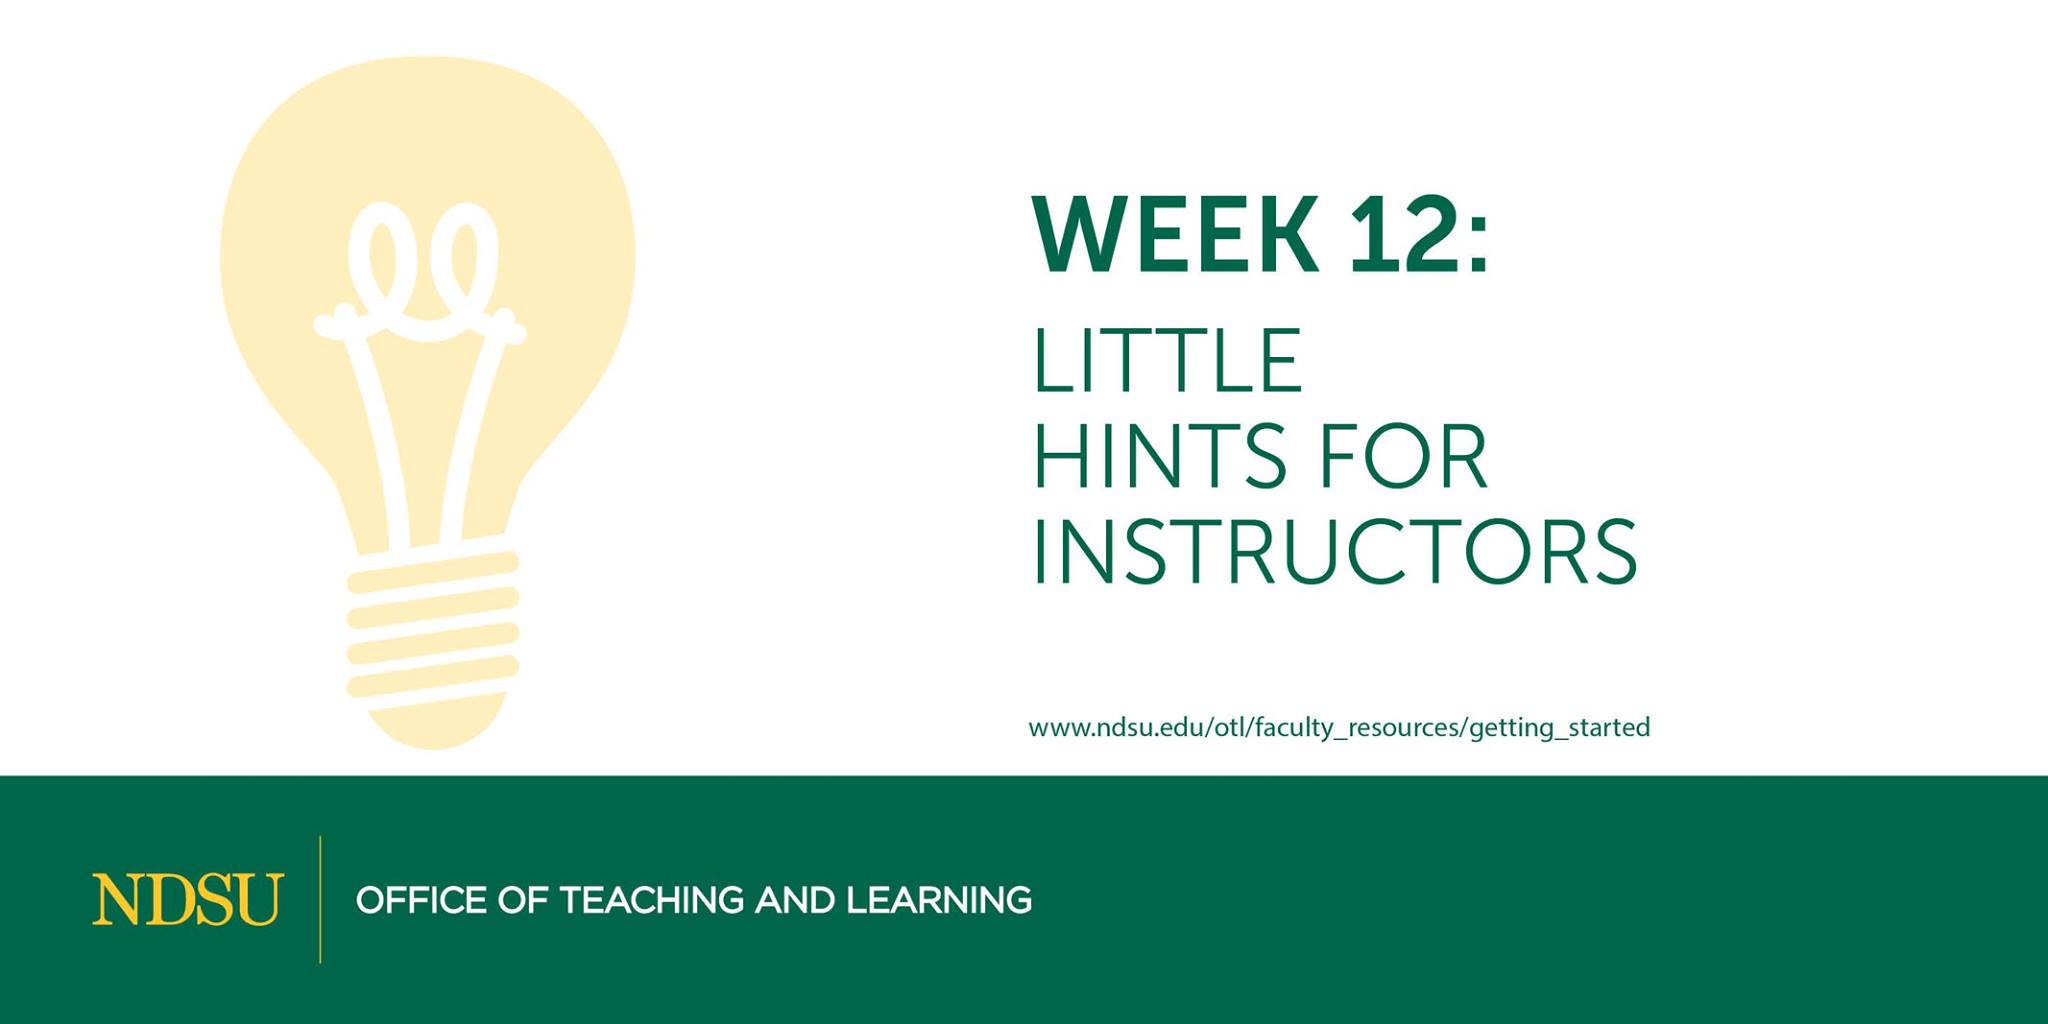 Week 12 Little Hints for Instructors